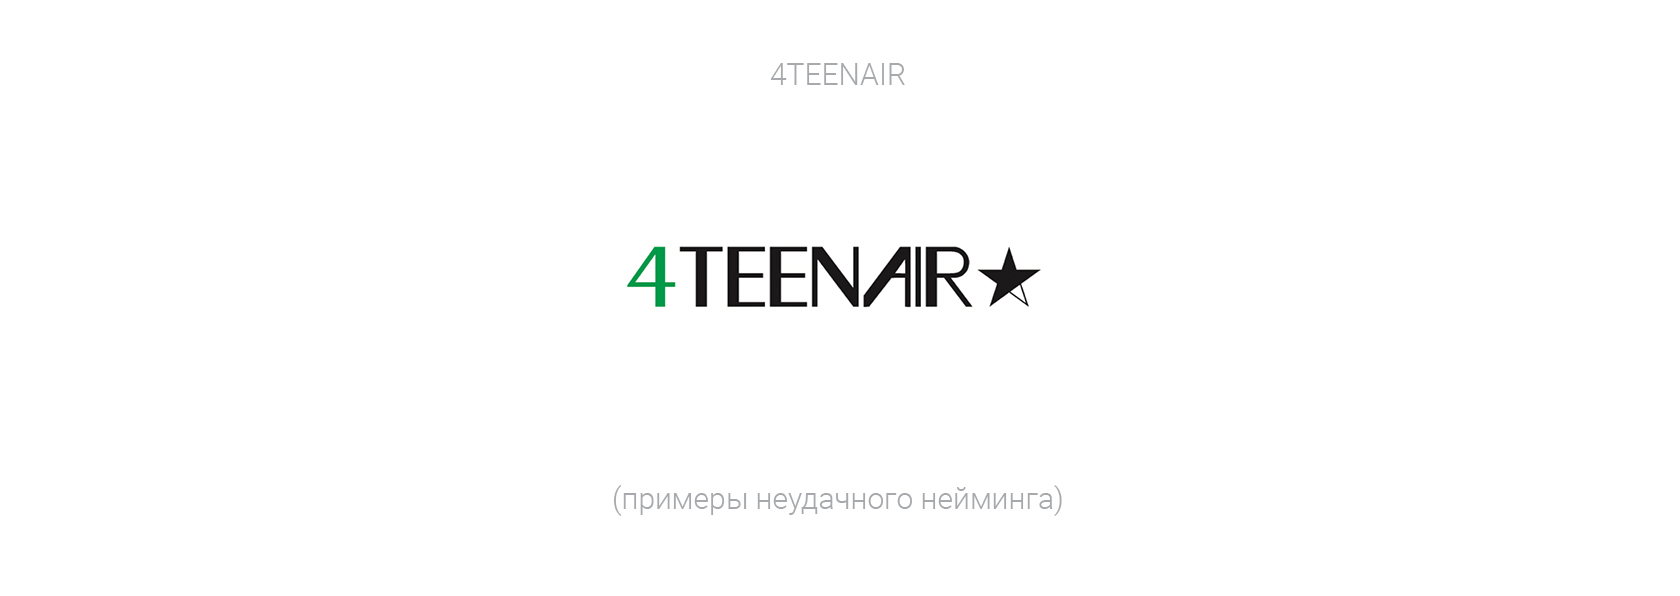 пример неудачного нейминга, 4TEENAIR лого